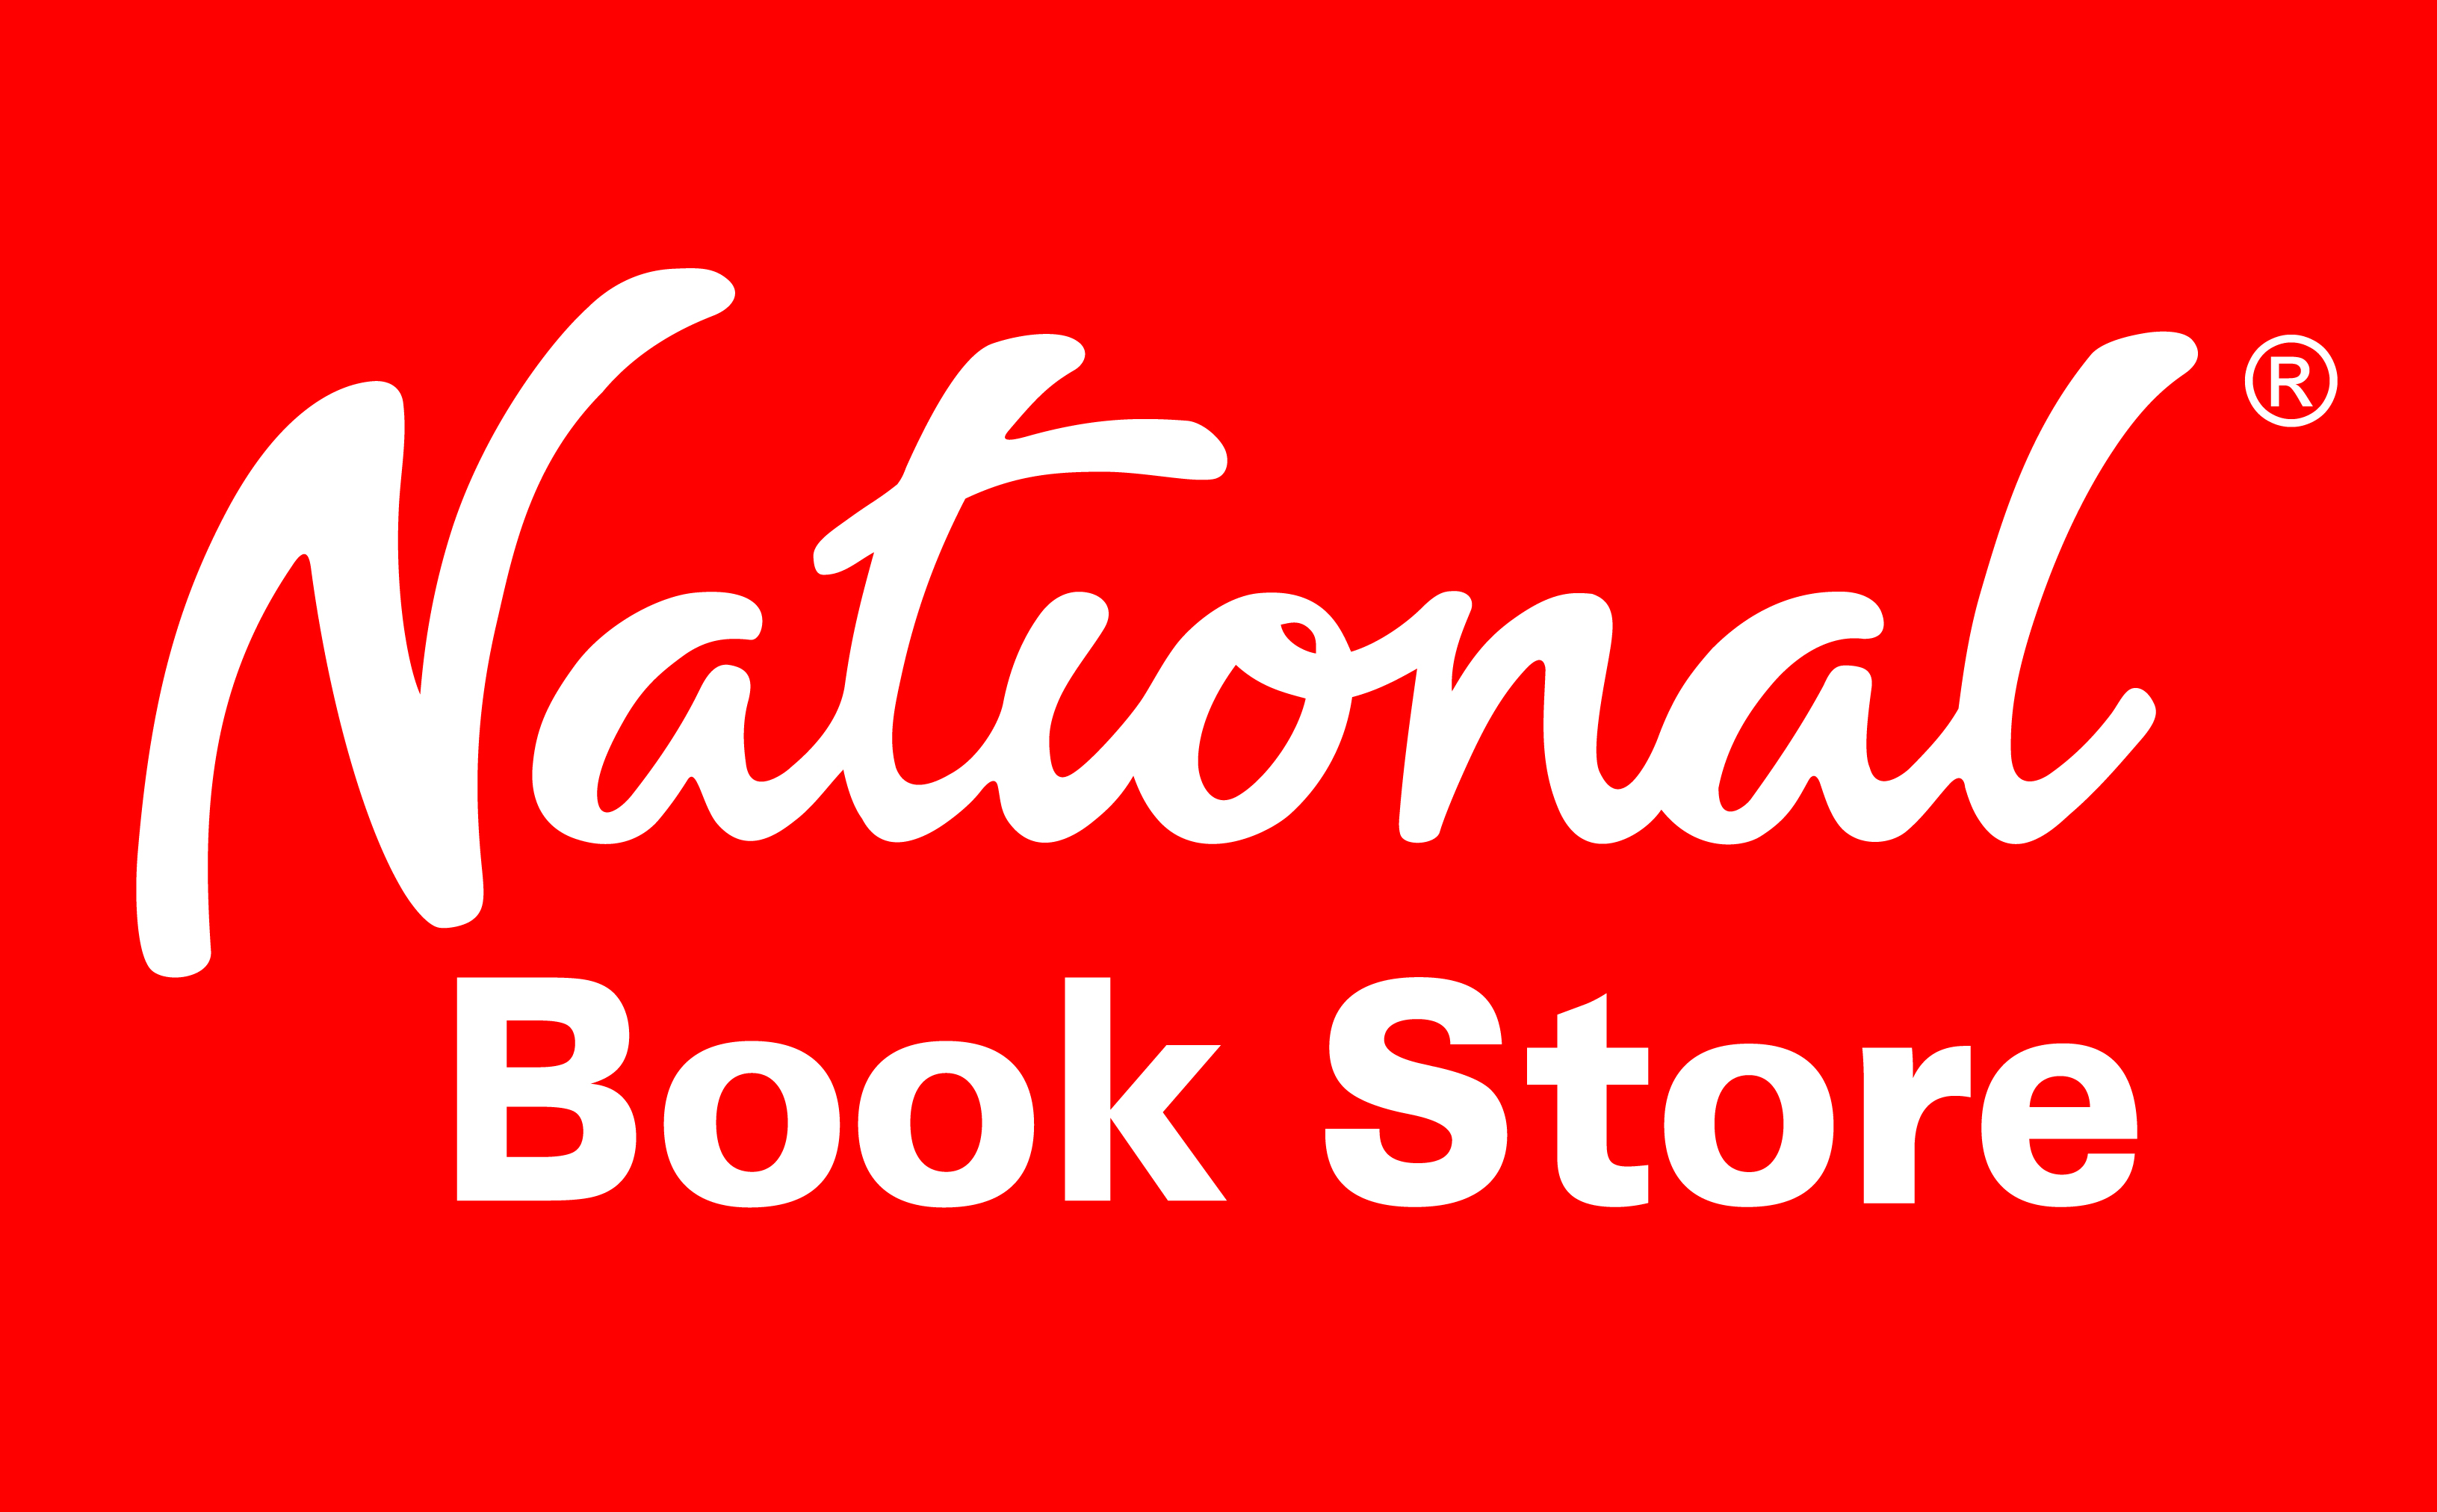 National Bookstore Logo